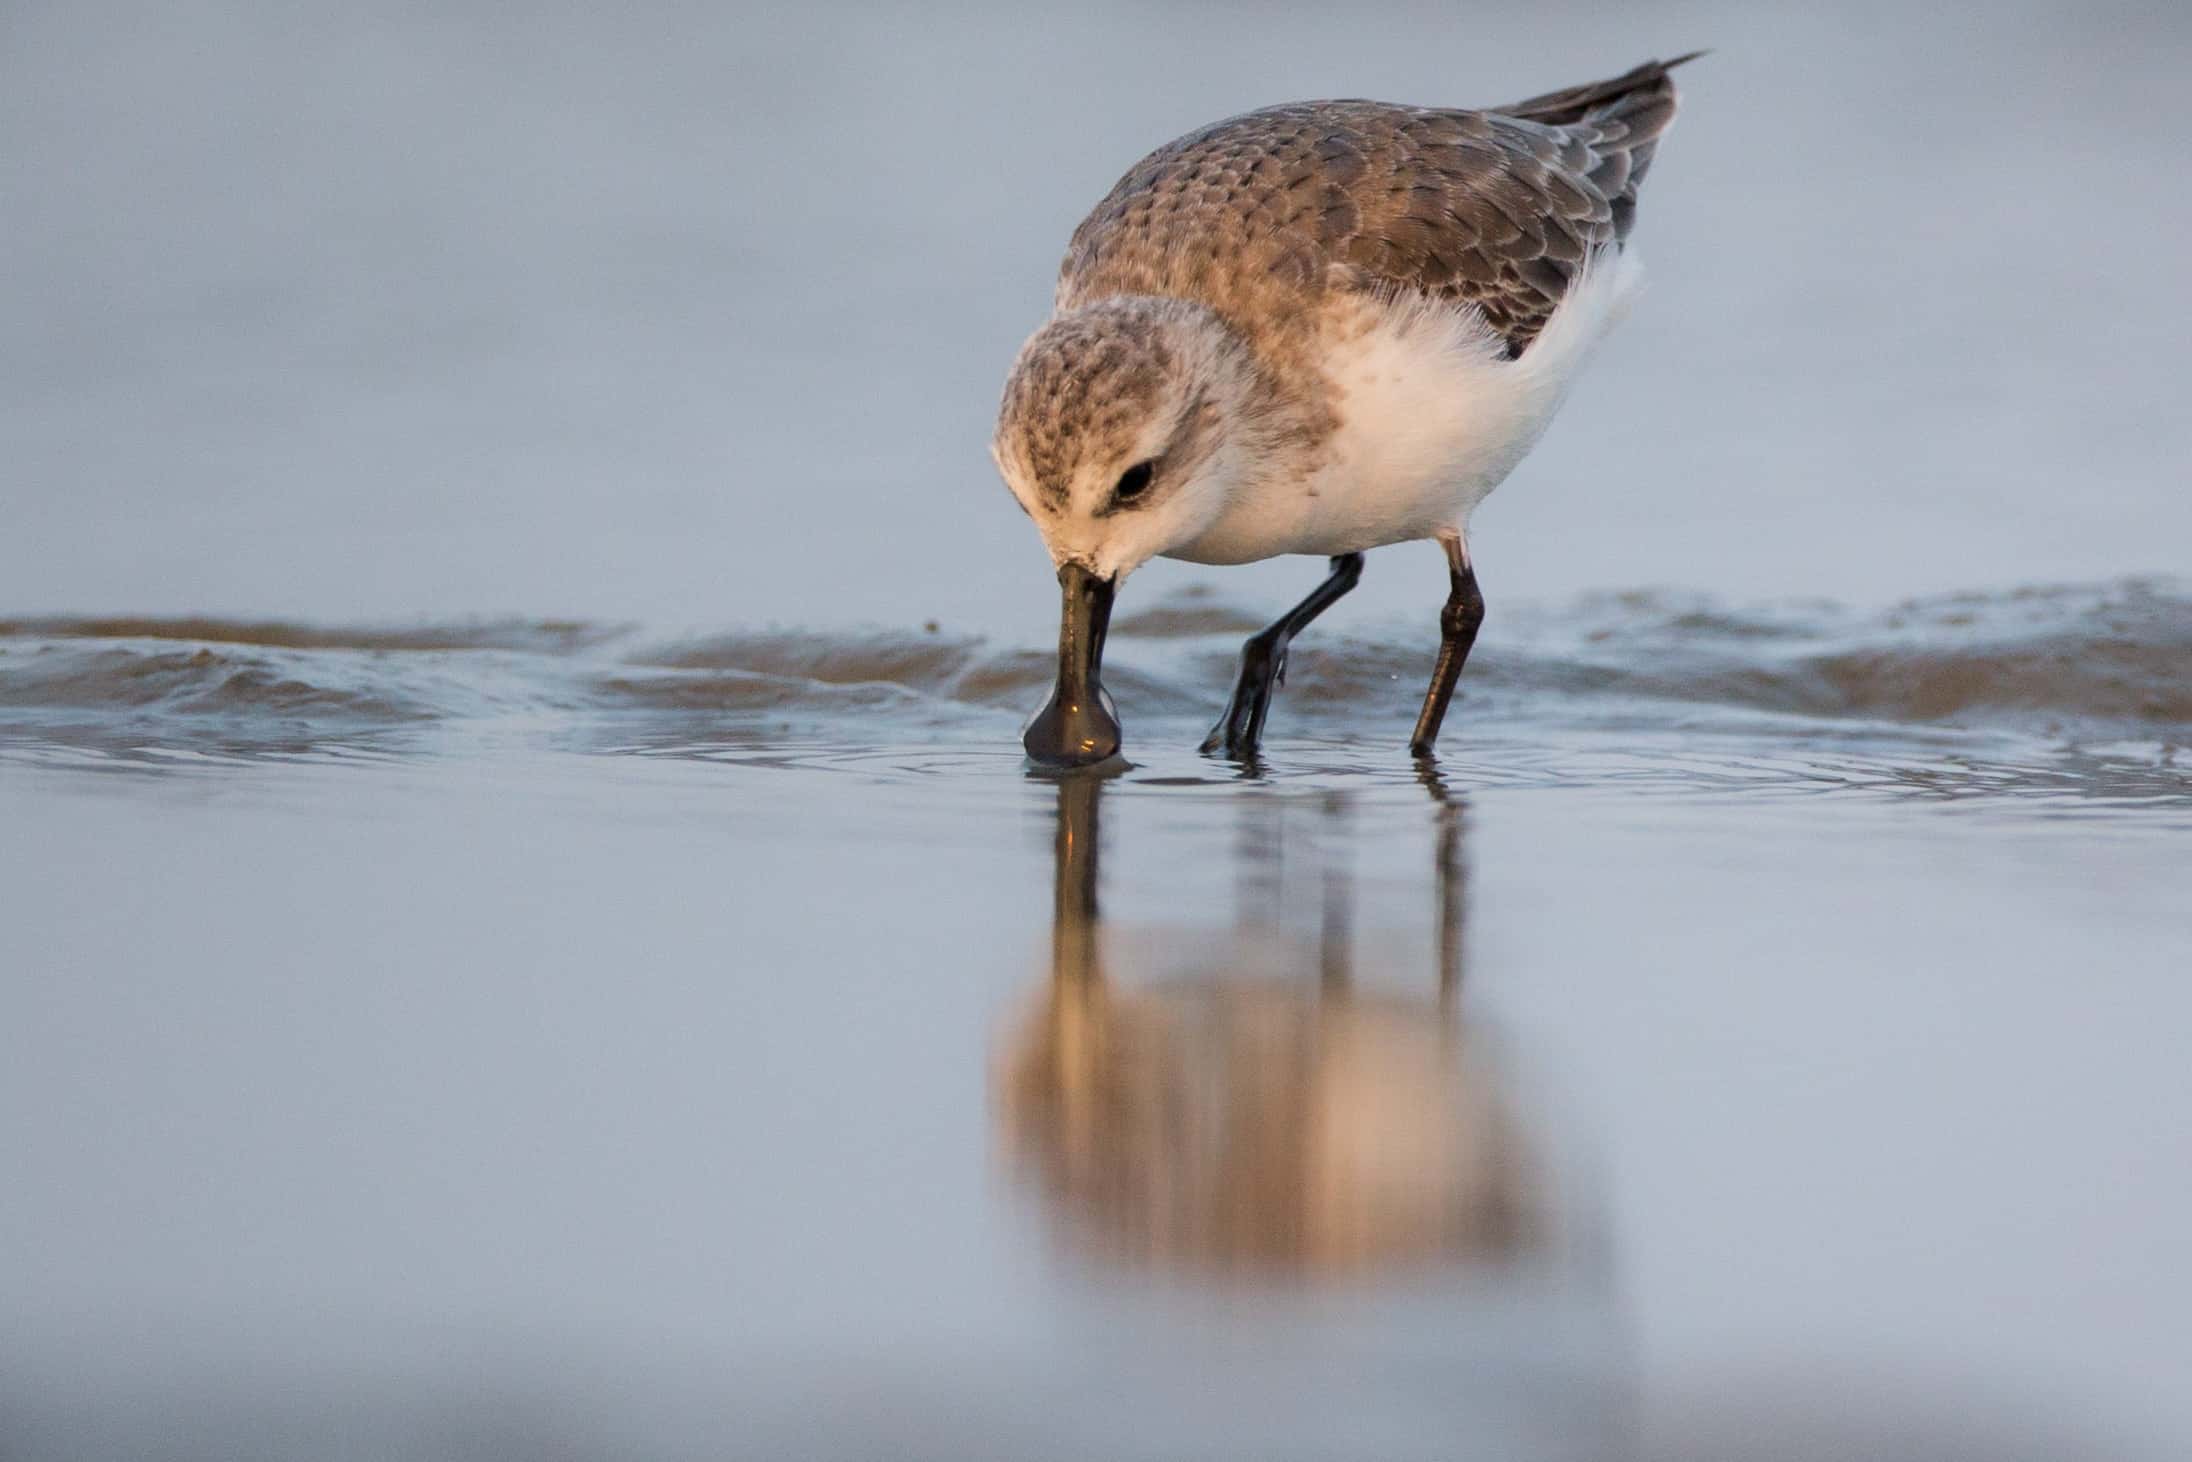 New study quantifies impact of hunting on migratory shorebird populations